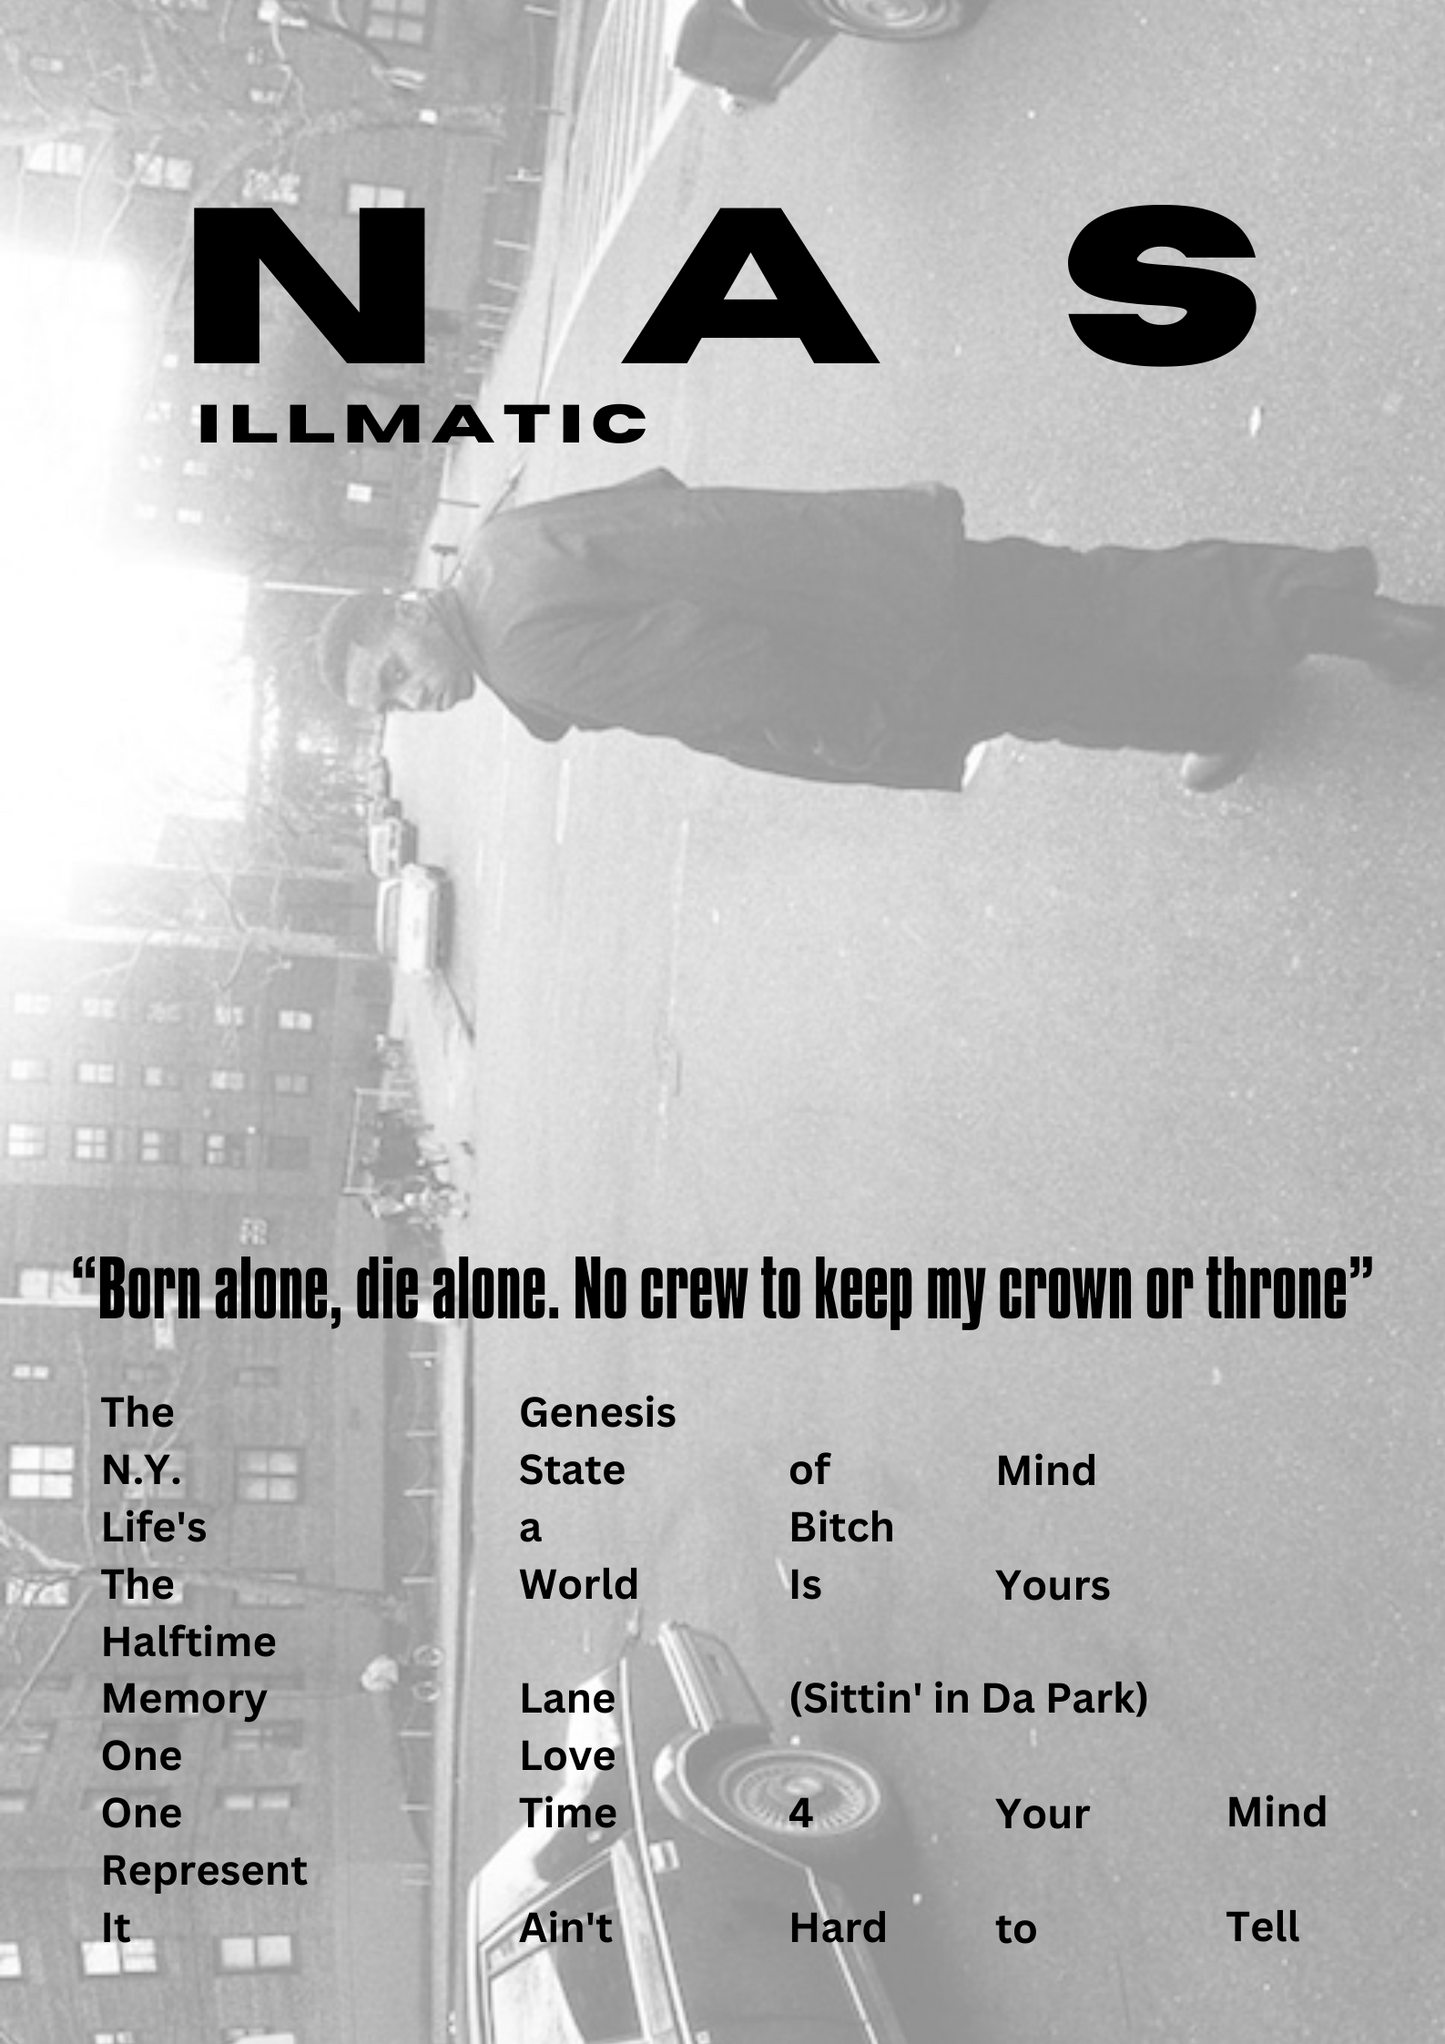 "Nas / Illmatic" Poster